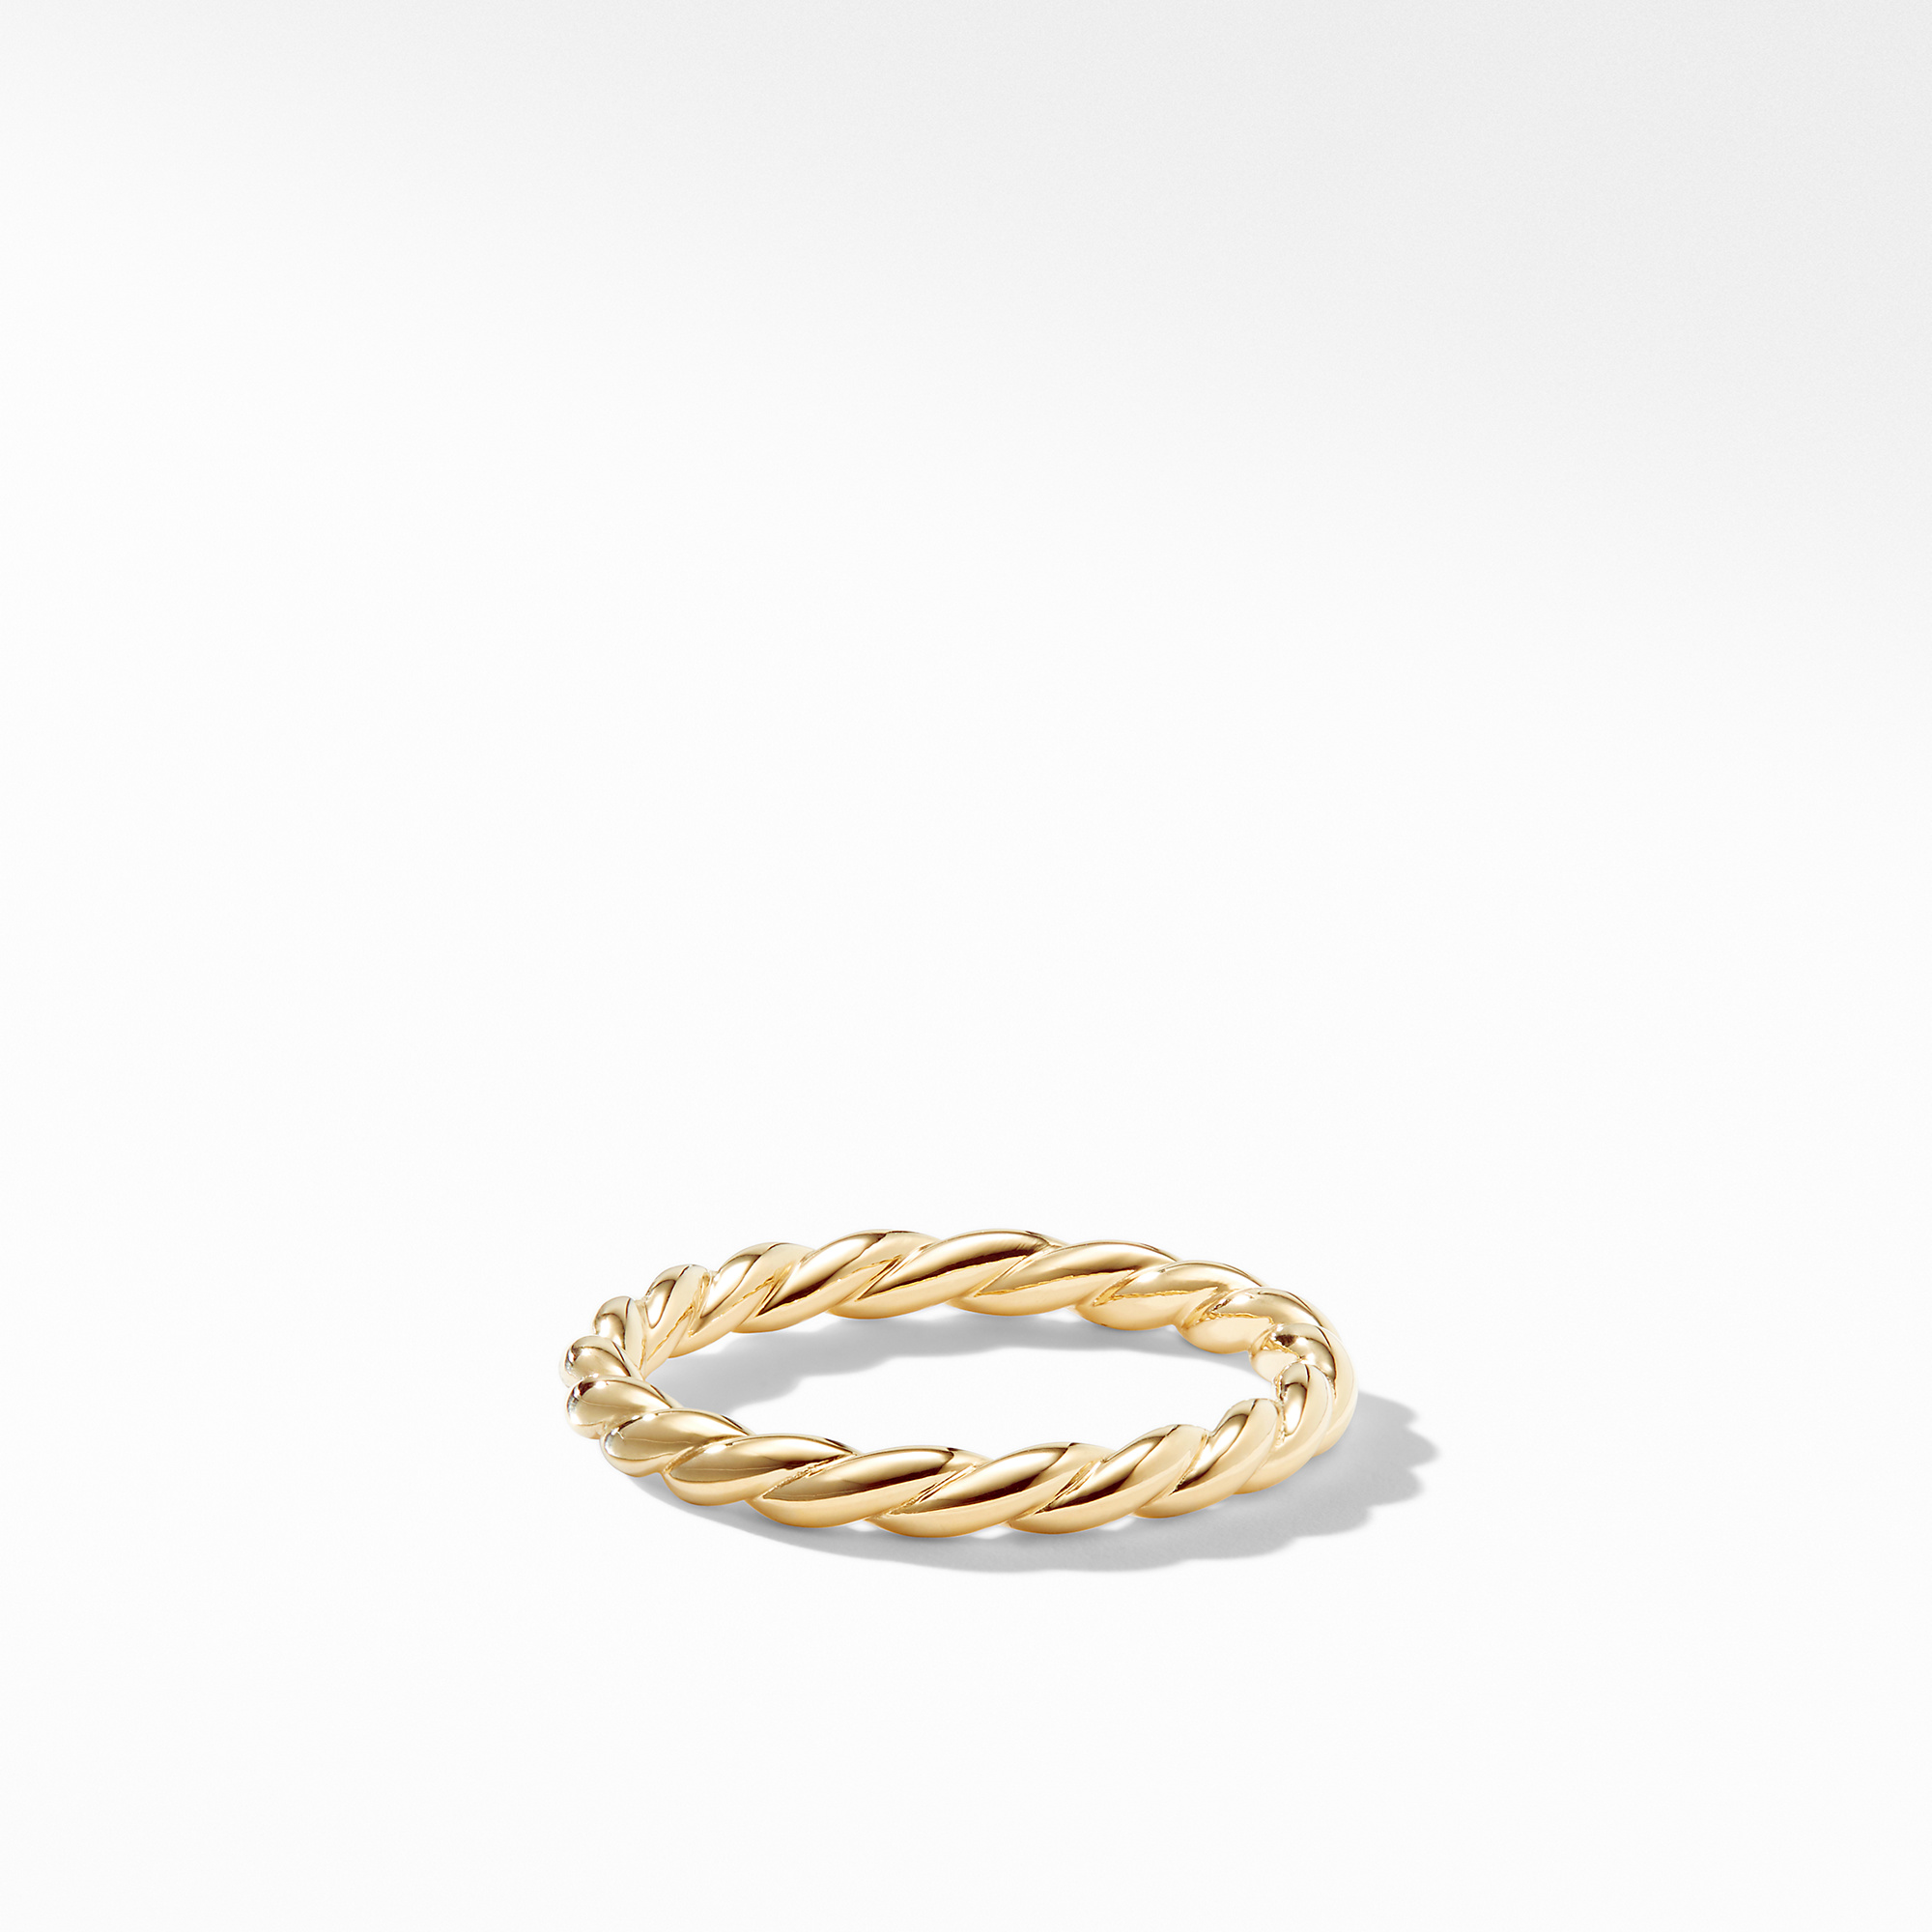 David Yurman Pave flex Ring in 18K Gold, size 7 0